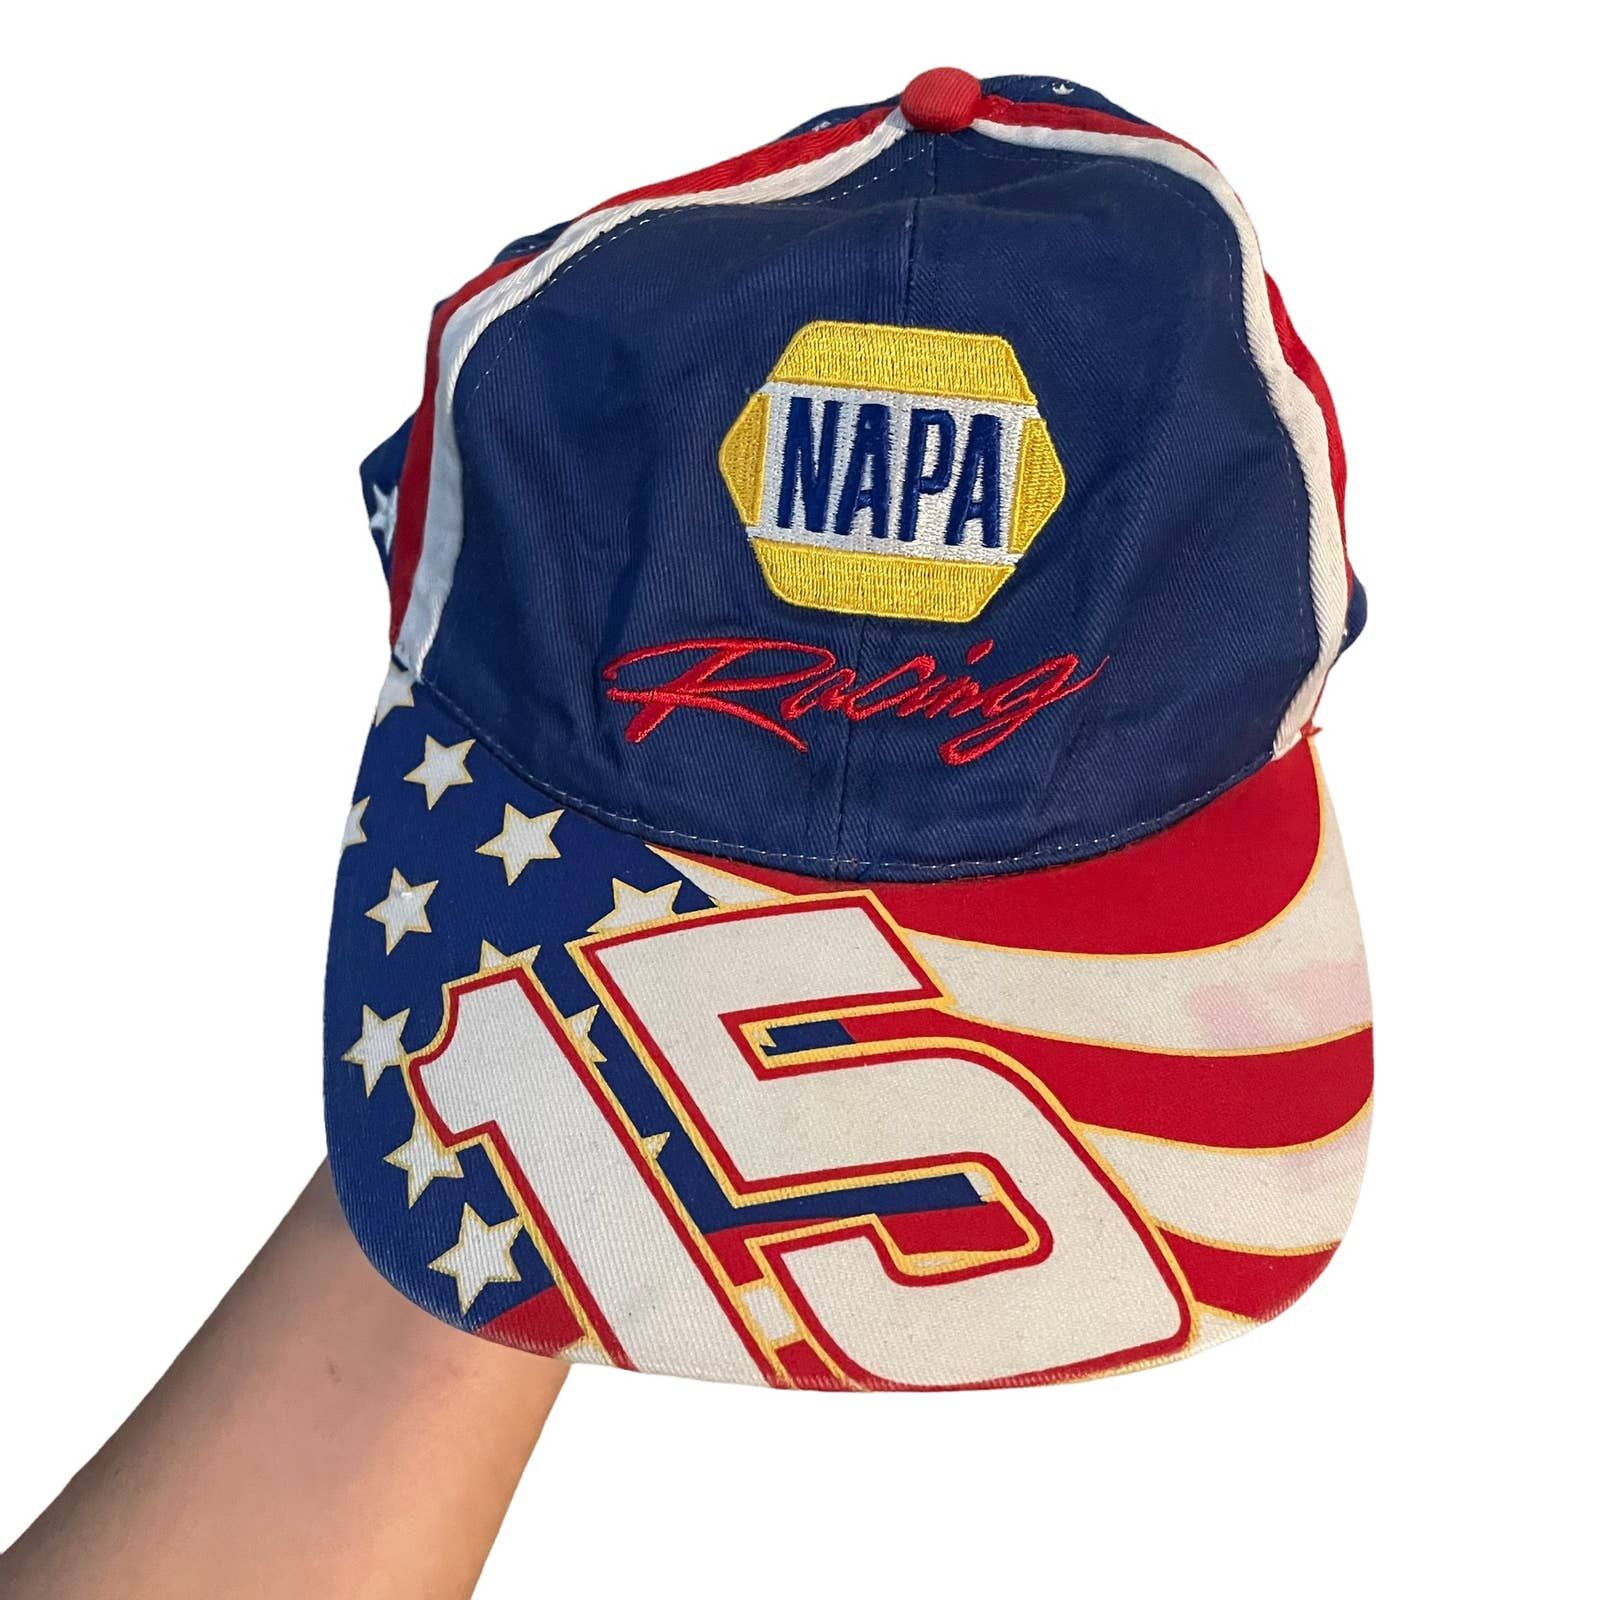 Vintage Napa racing hat | Grailed